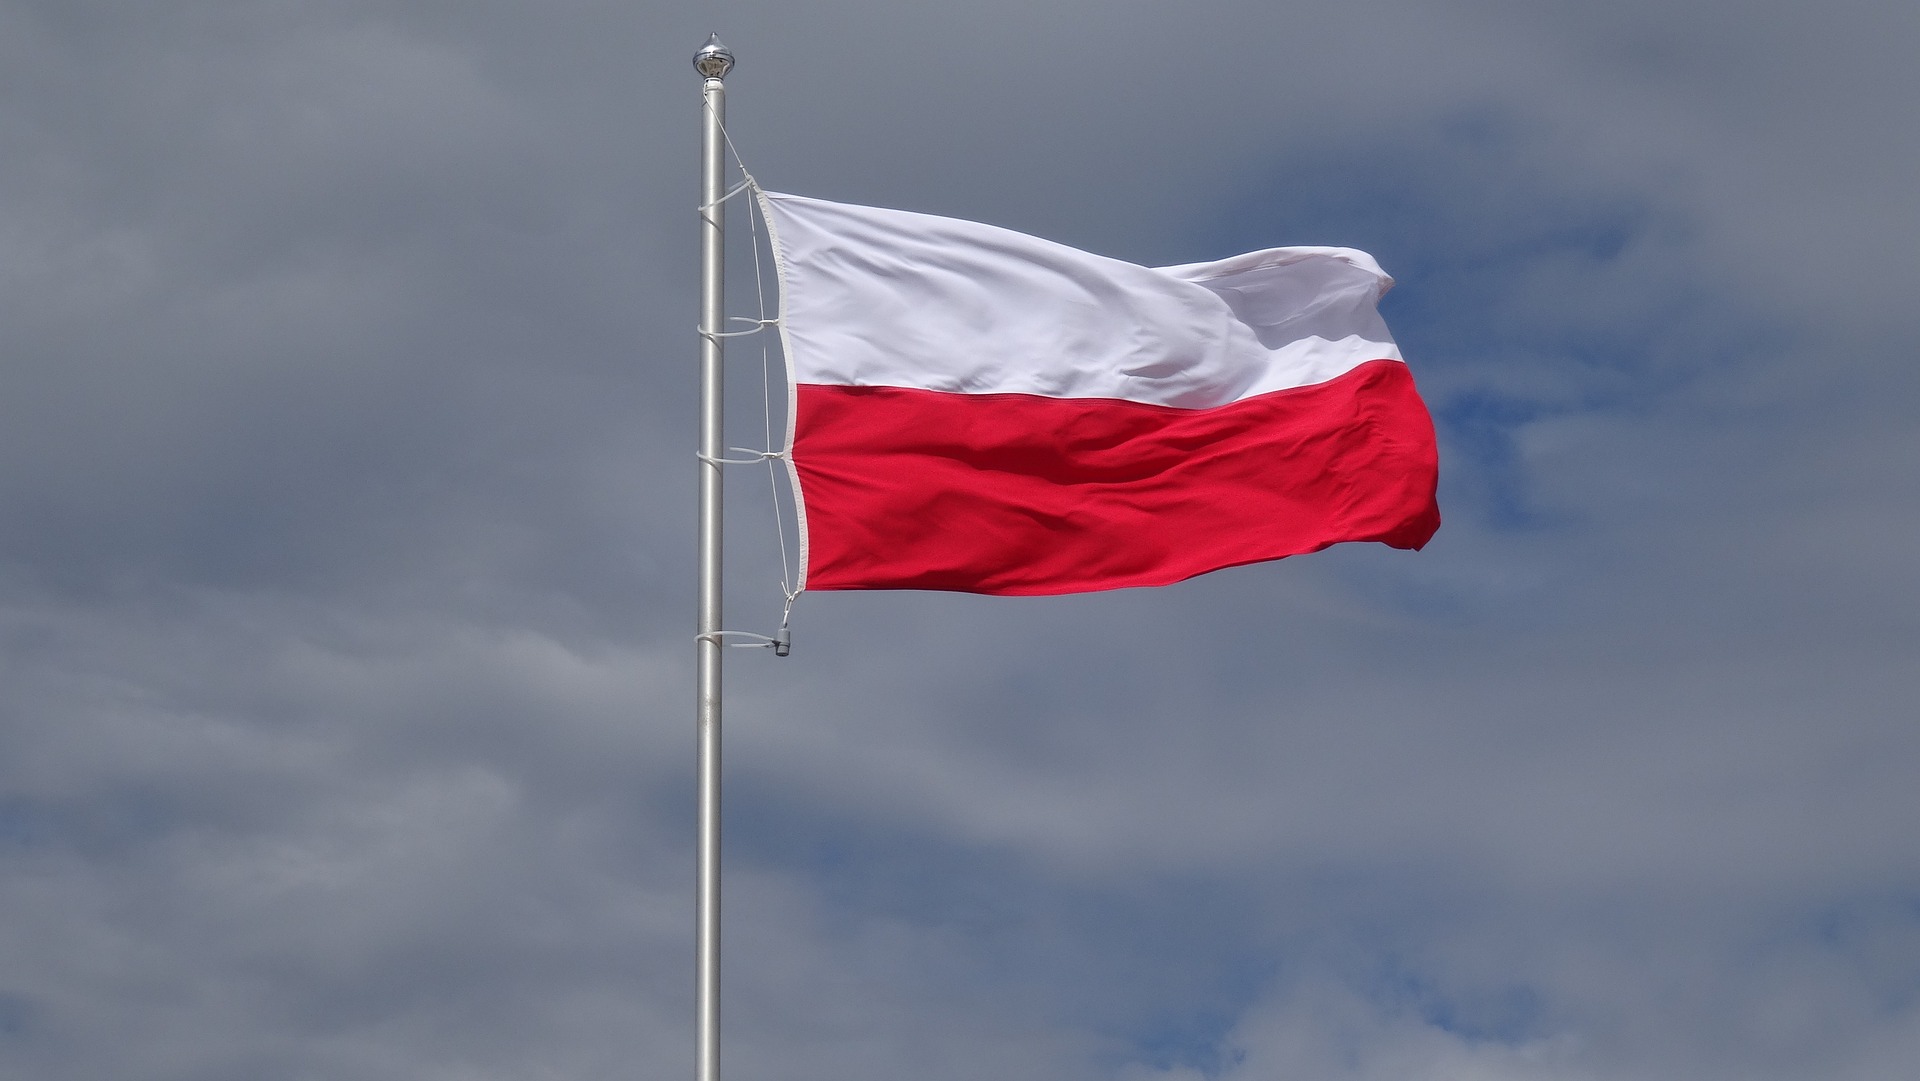 polska vlajka